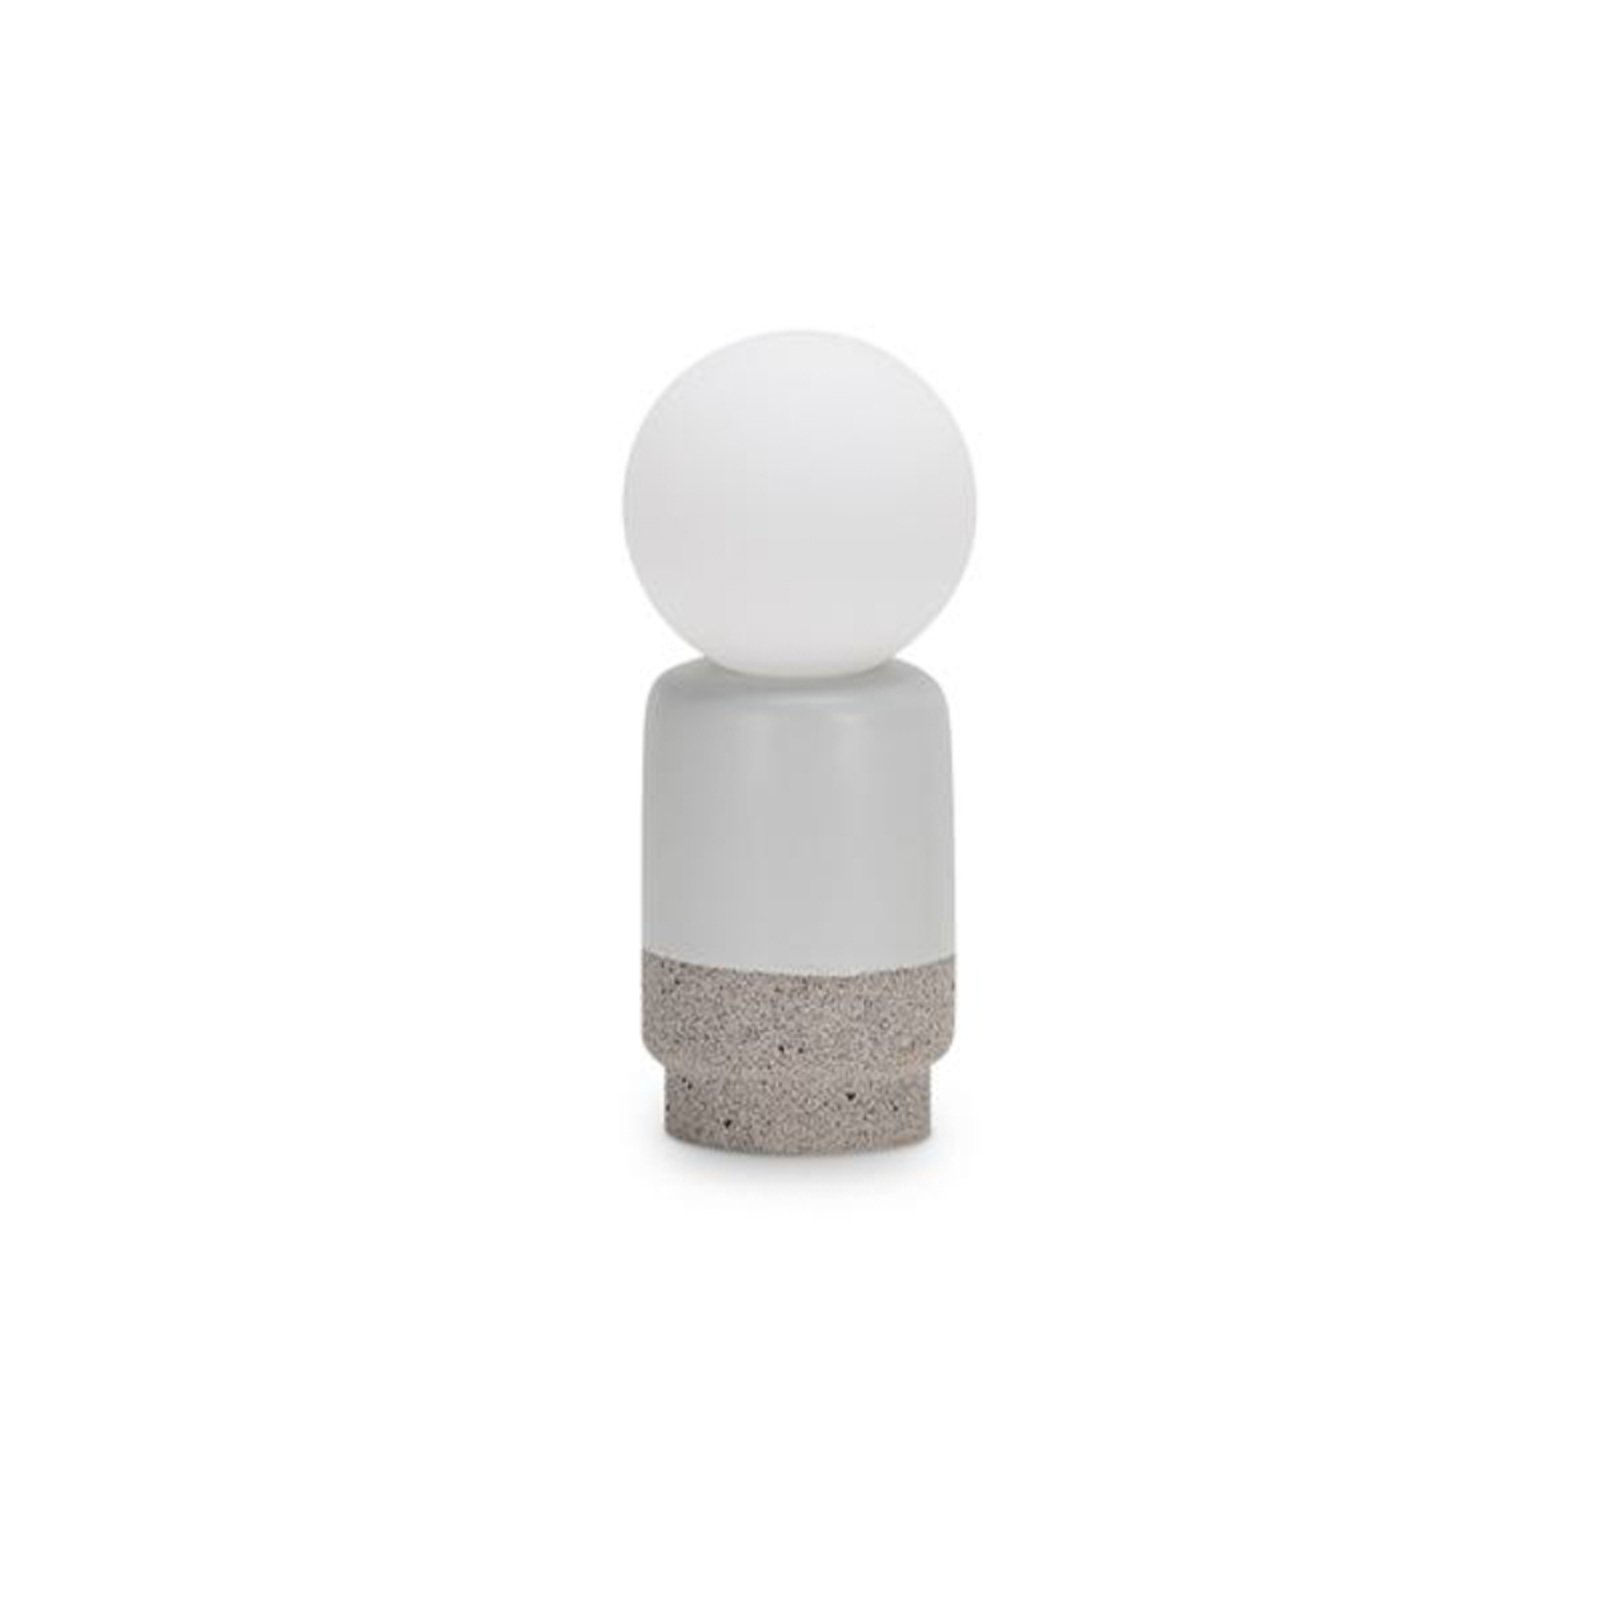 Ideal Lux Cream bordslampa, höjd 22 cm, vit, gips, opalglas